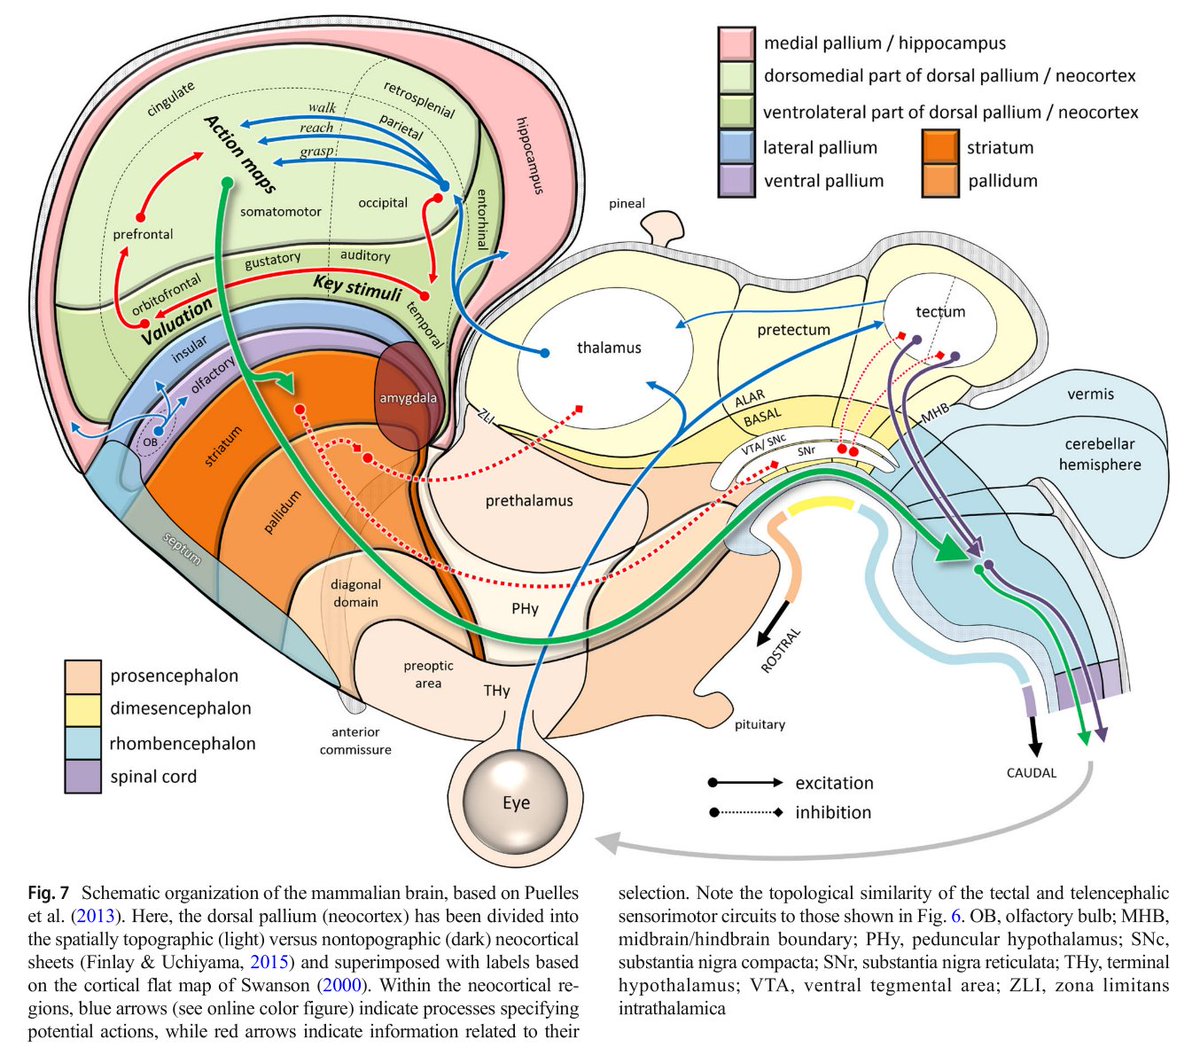 The mammalian brain. Interesting how the amygdala seems to be a kind of fusion zone.